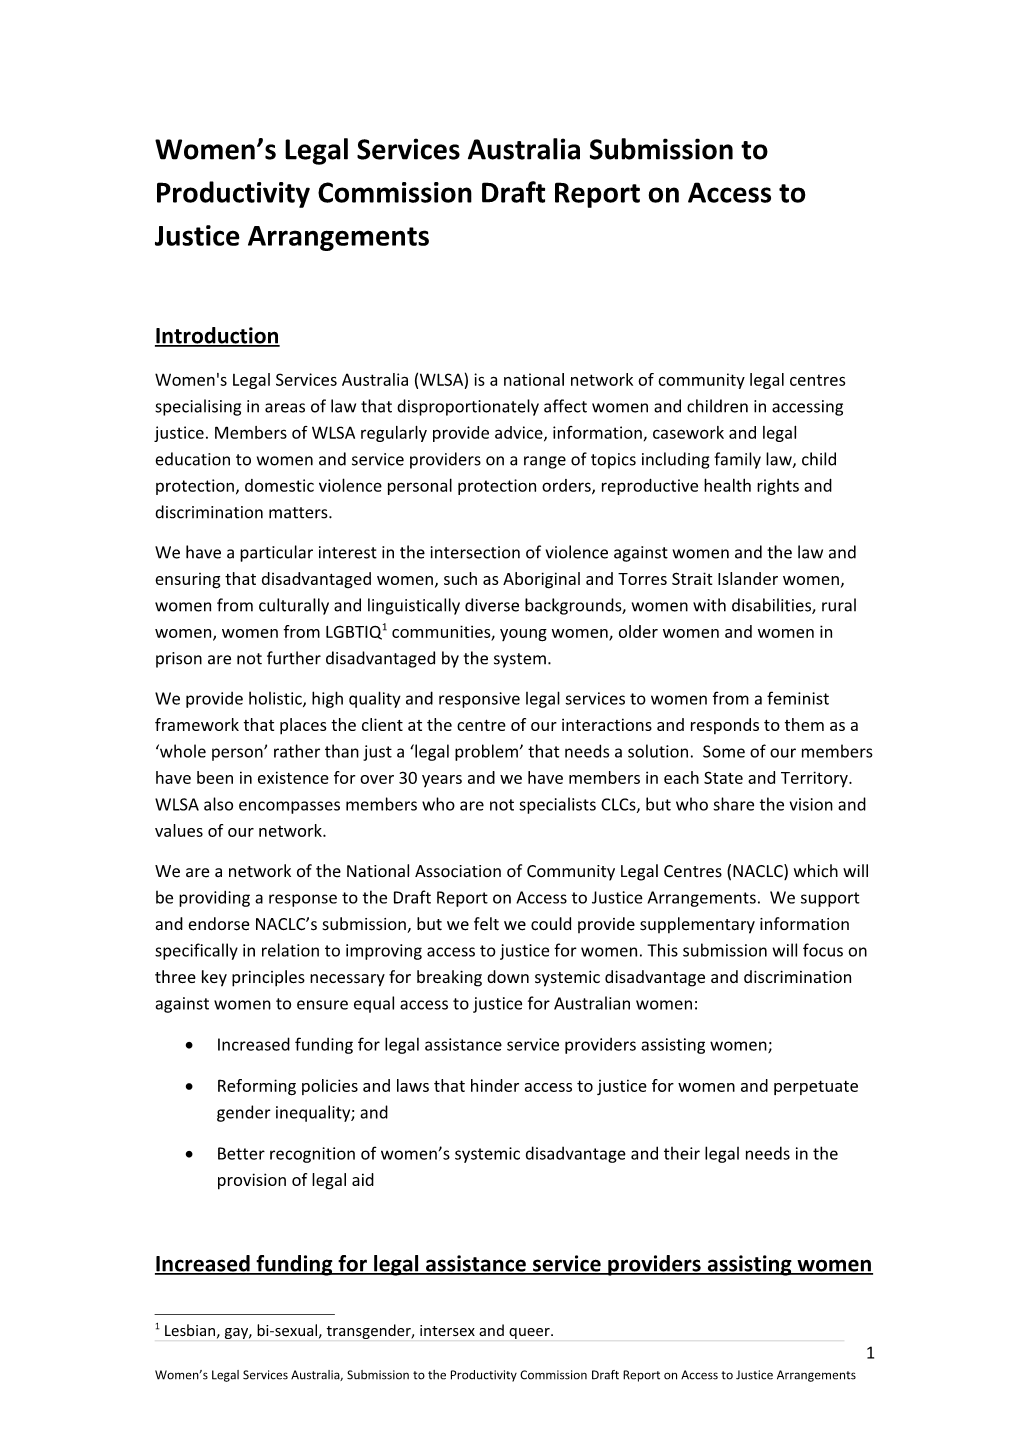 Submission DR207 - Women's Legal Services Australia - Access to Justice Arrangements